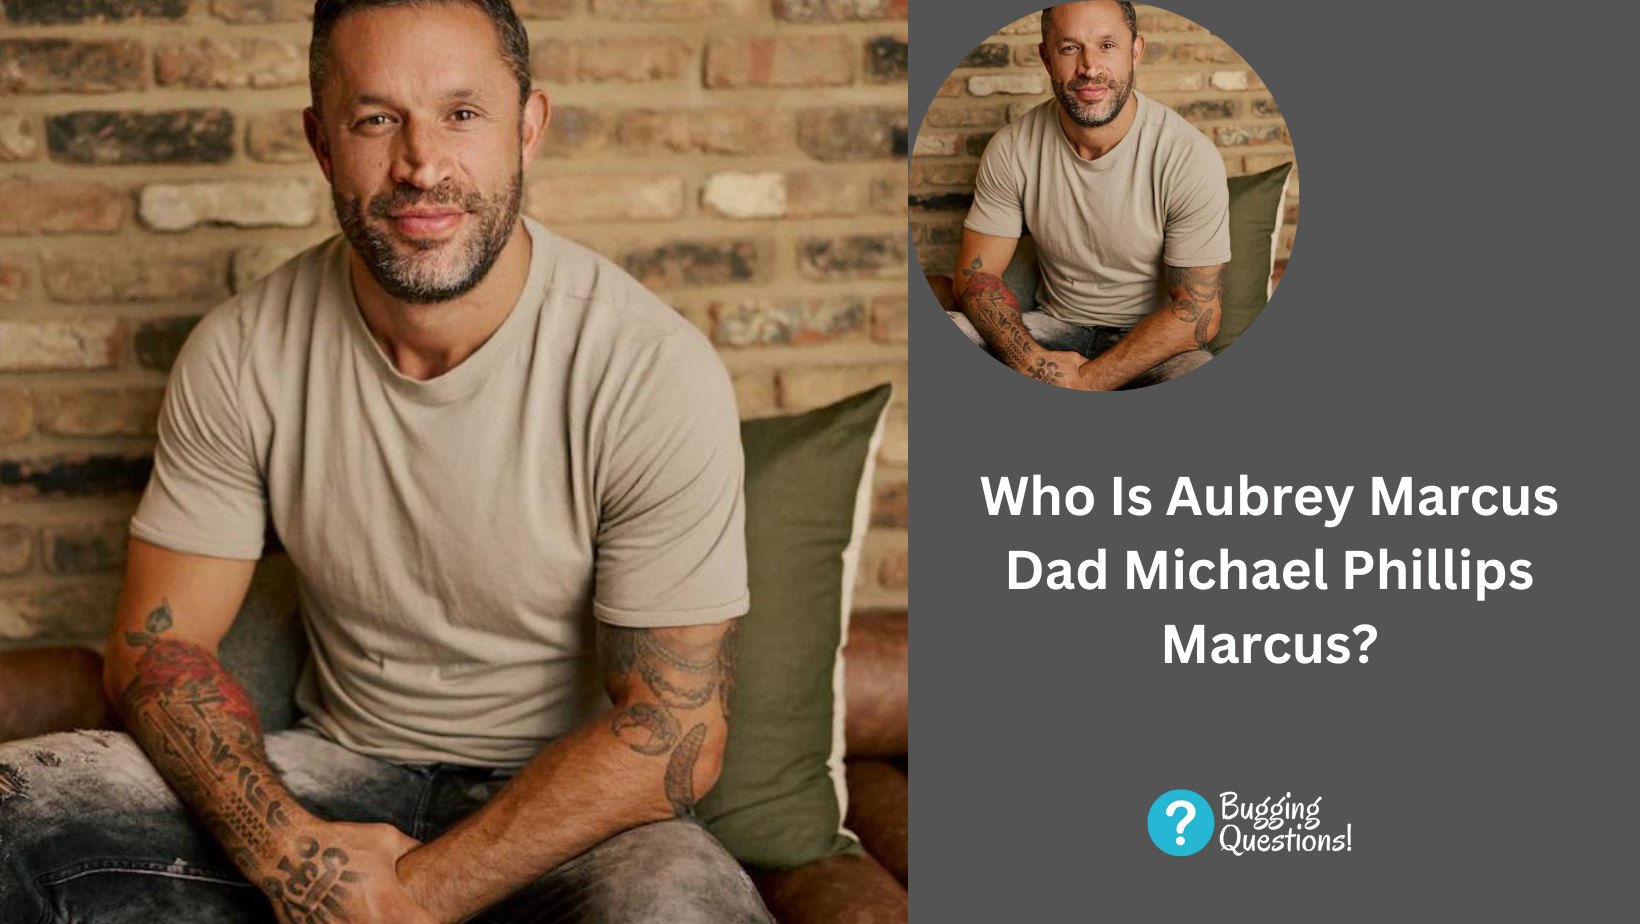 Who Is Aubrey Marcus Dad Michael Phillips Marcus?